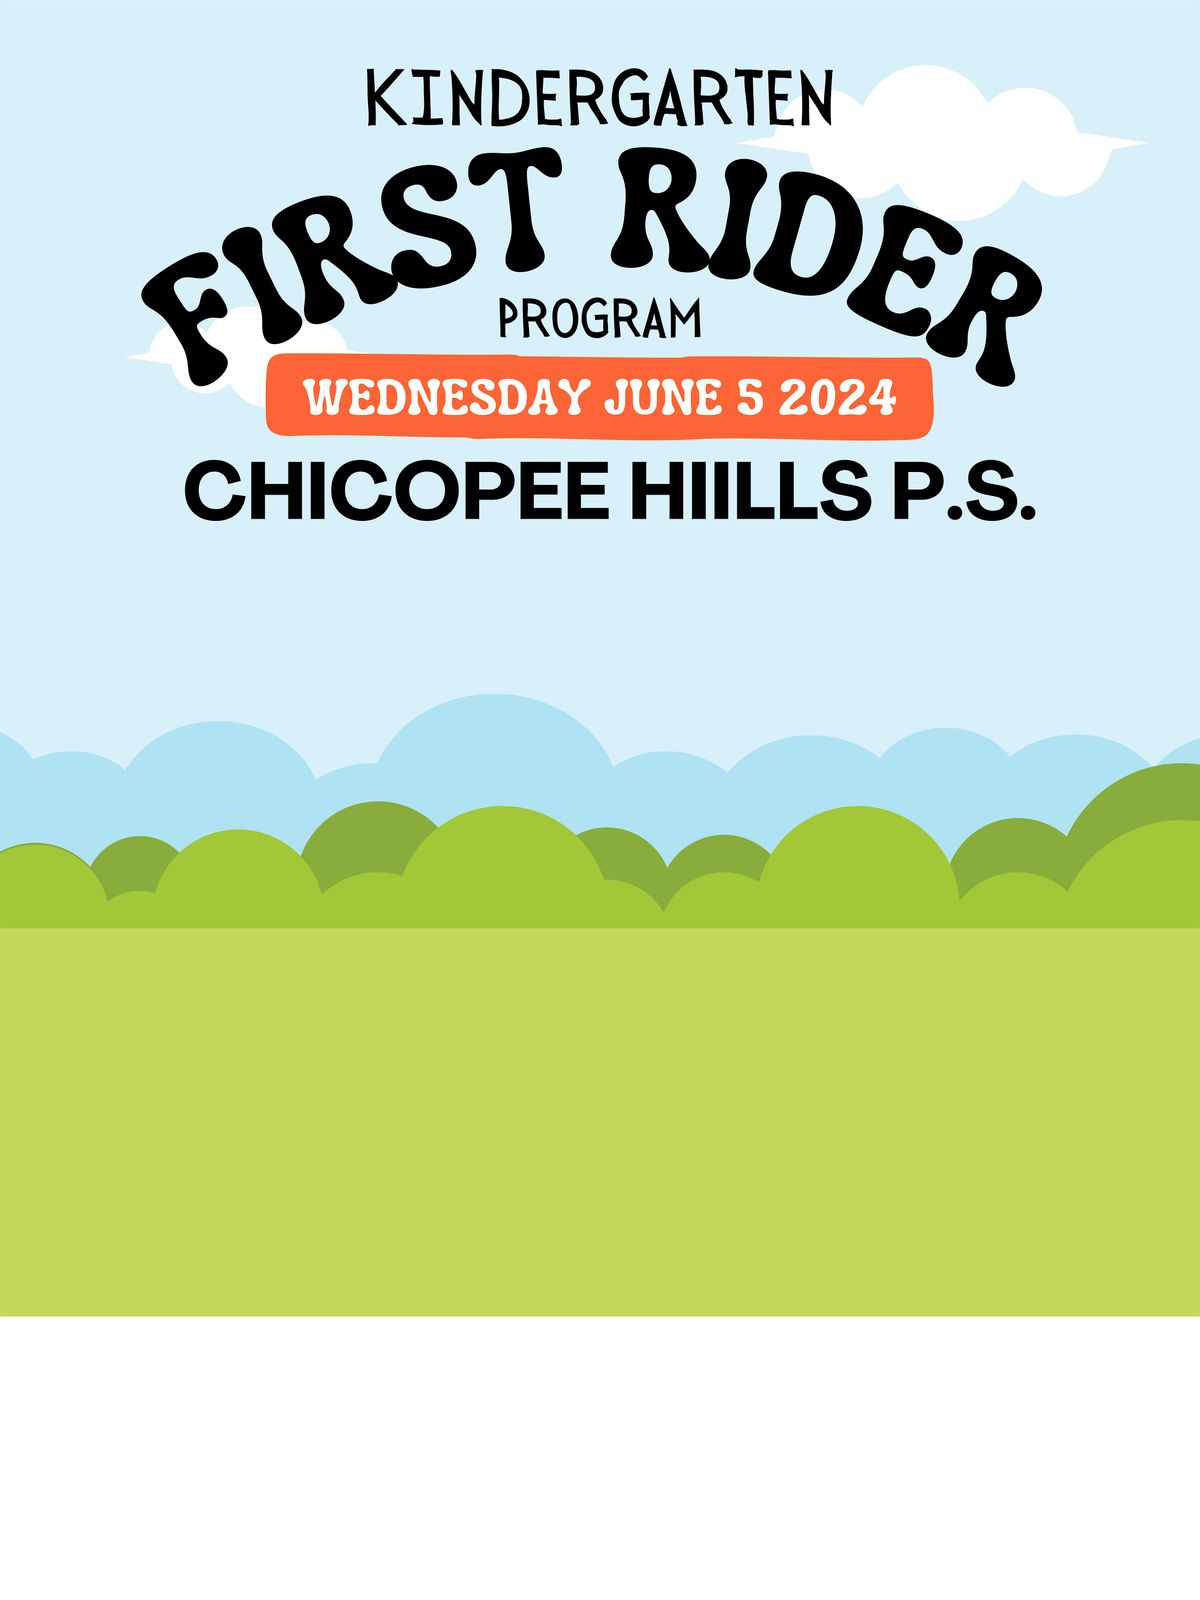 First Rider Program - Chicopee Hills P.S. Kitchener, ON (5:30 PM Session)